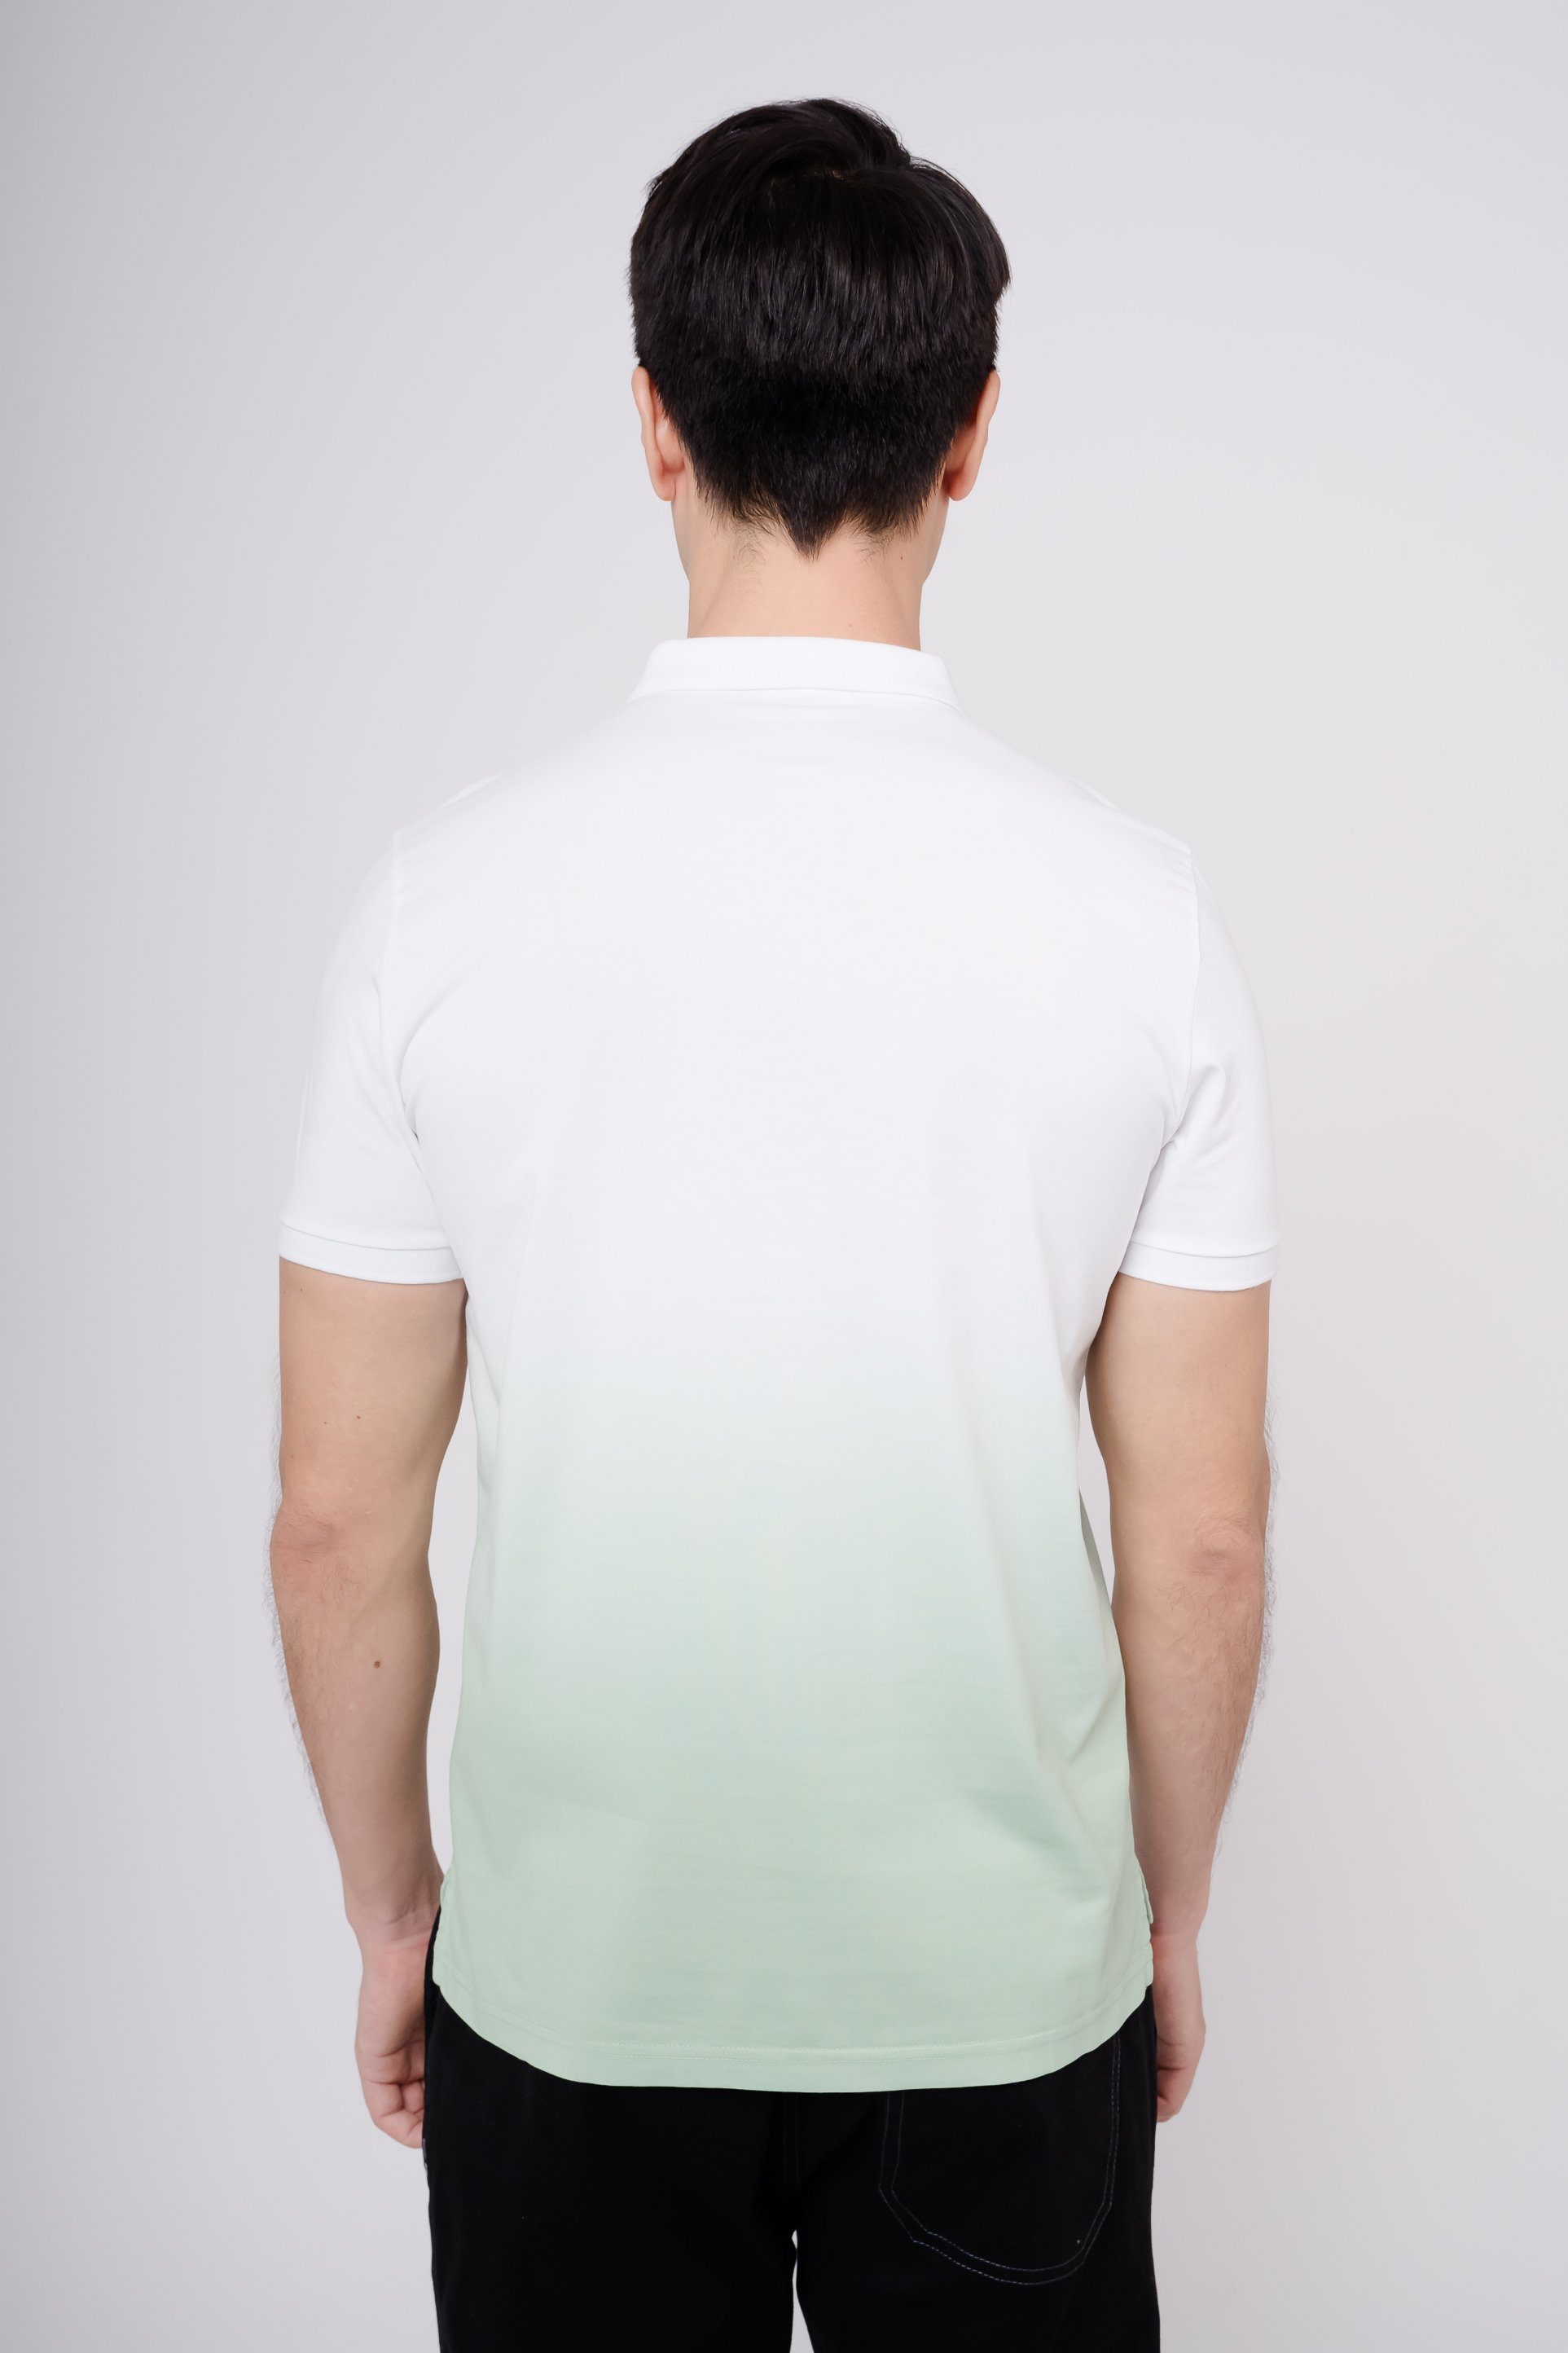 Dip grün-weiß GIORDANO Dye-Effekt Poloshirt mit